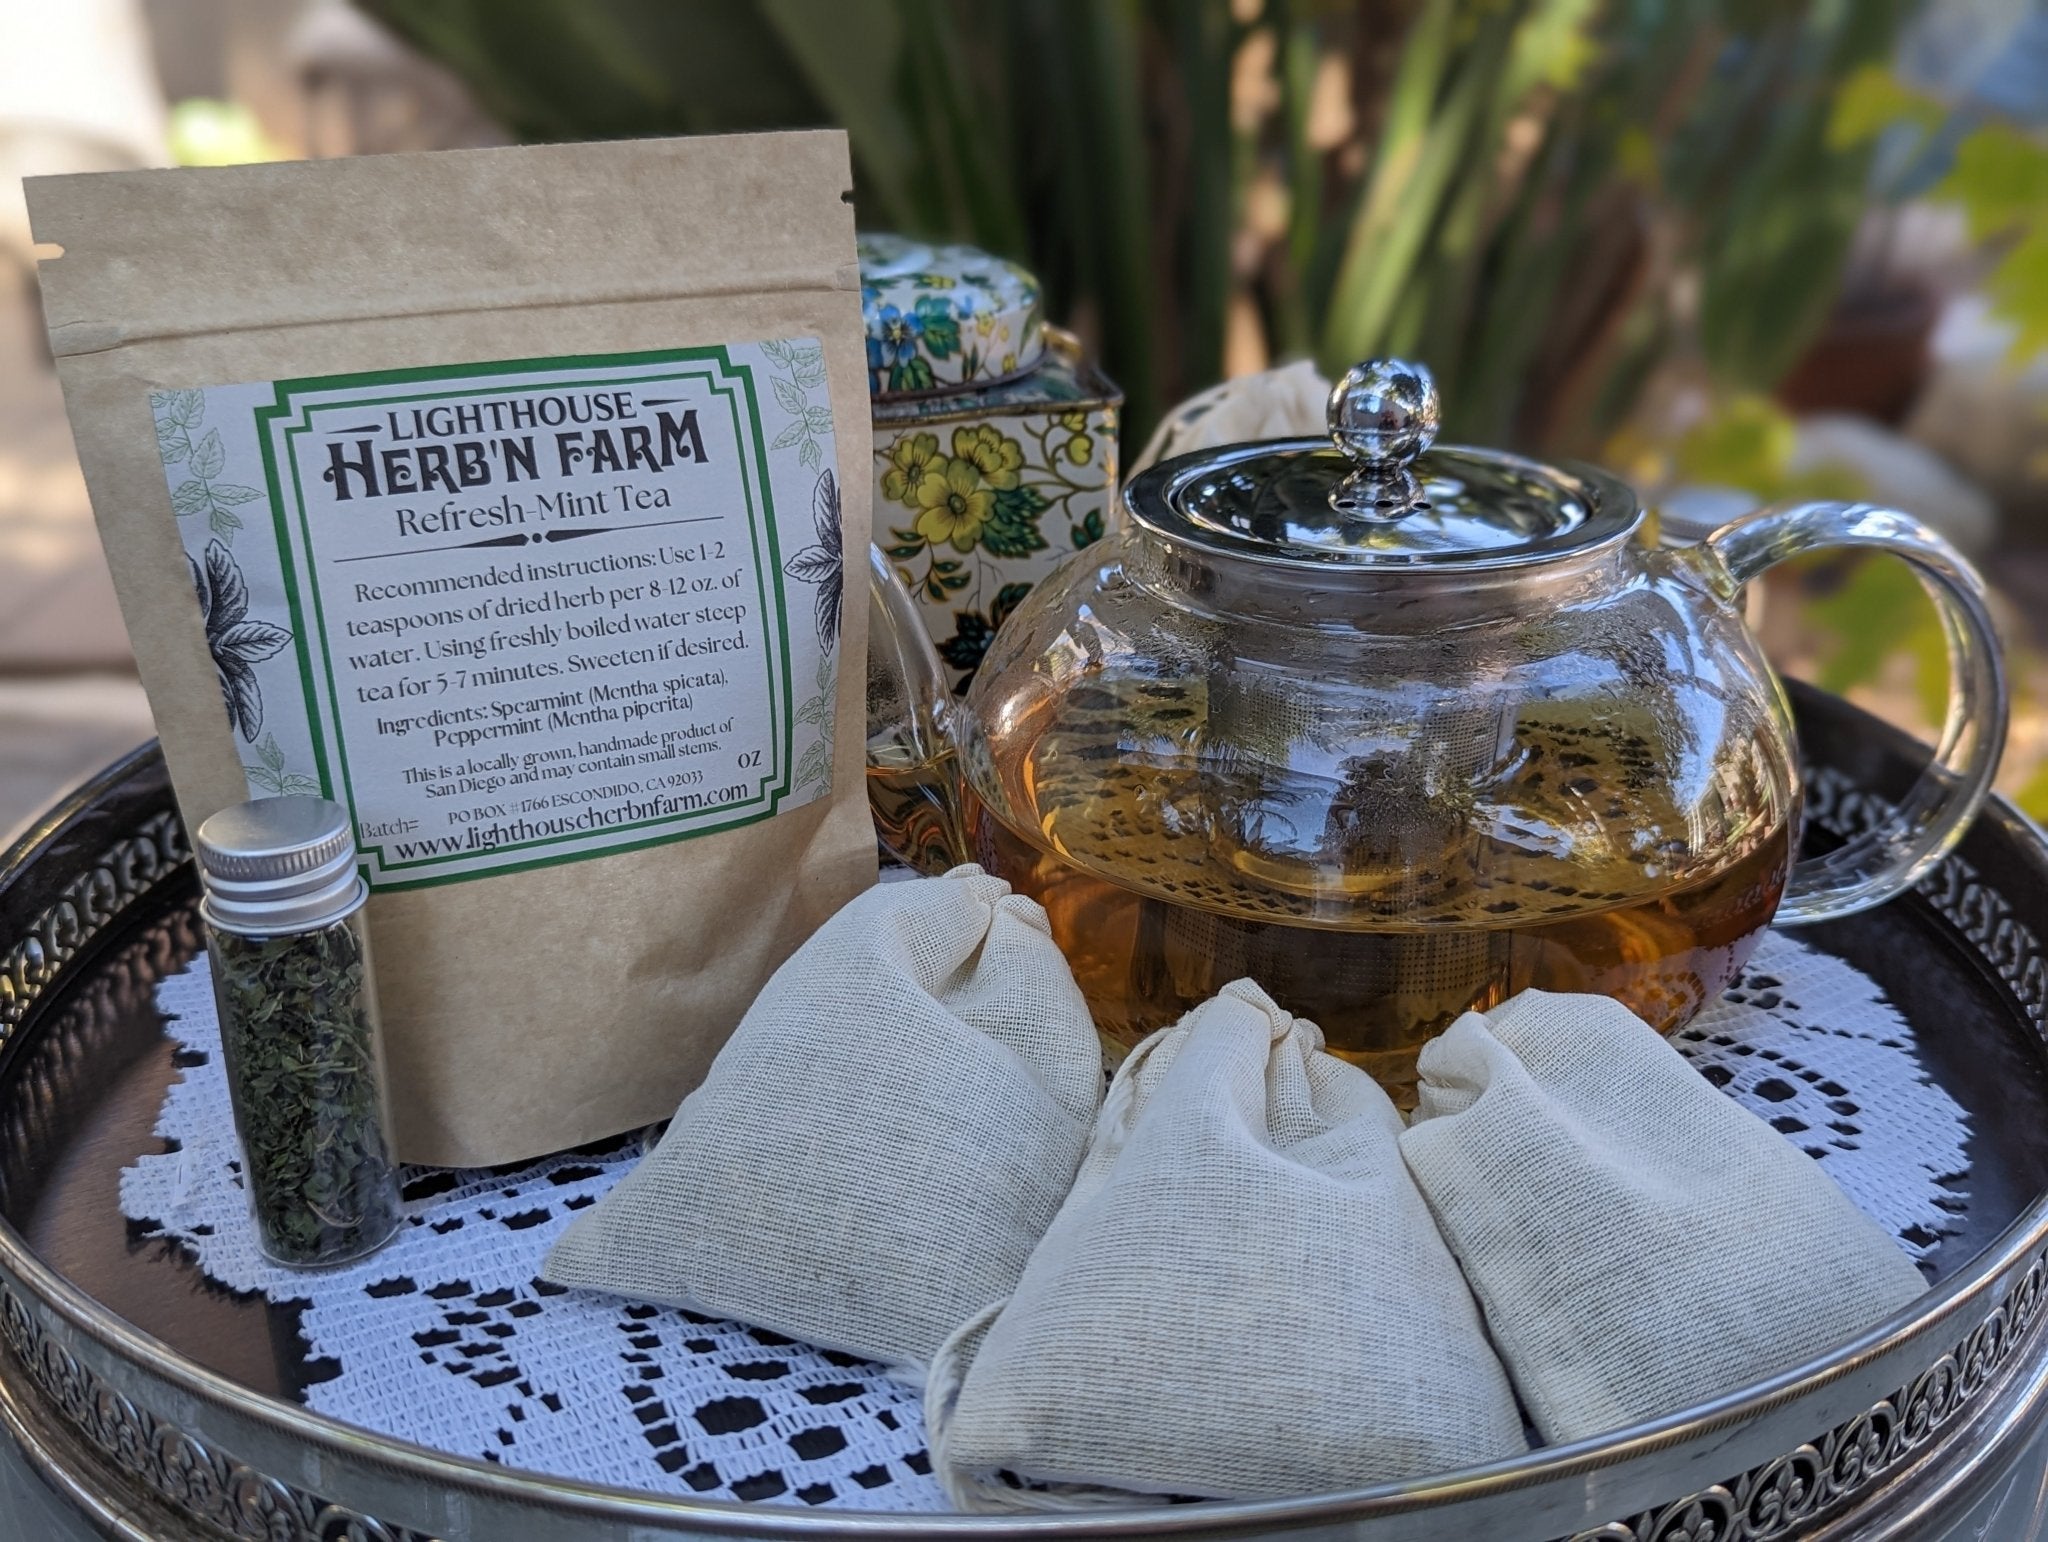 Refresh•Mint Tea - Lighthouse Herb'n Farm